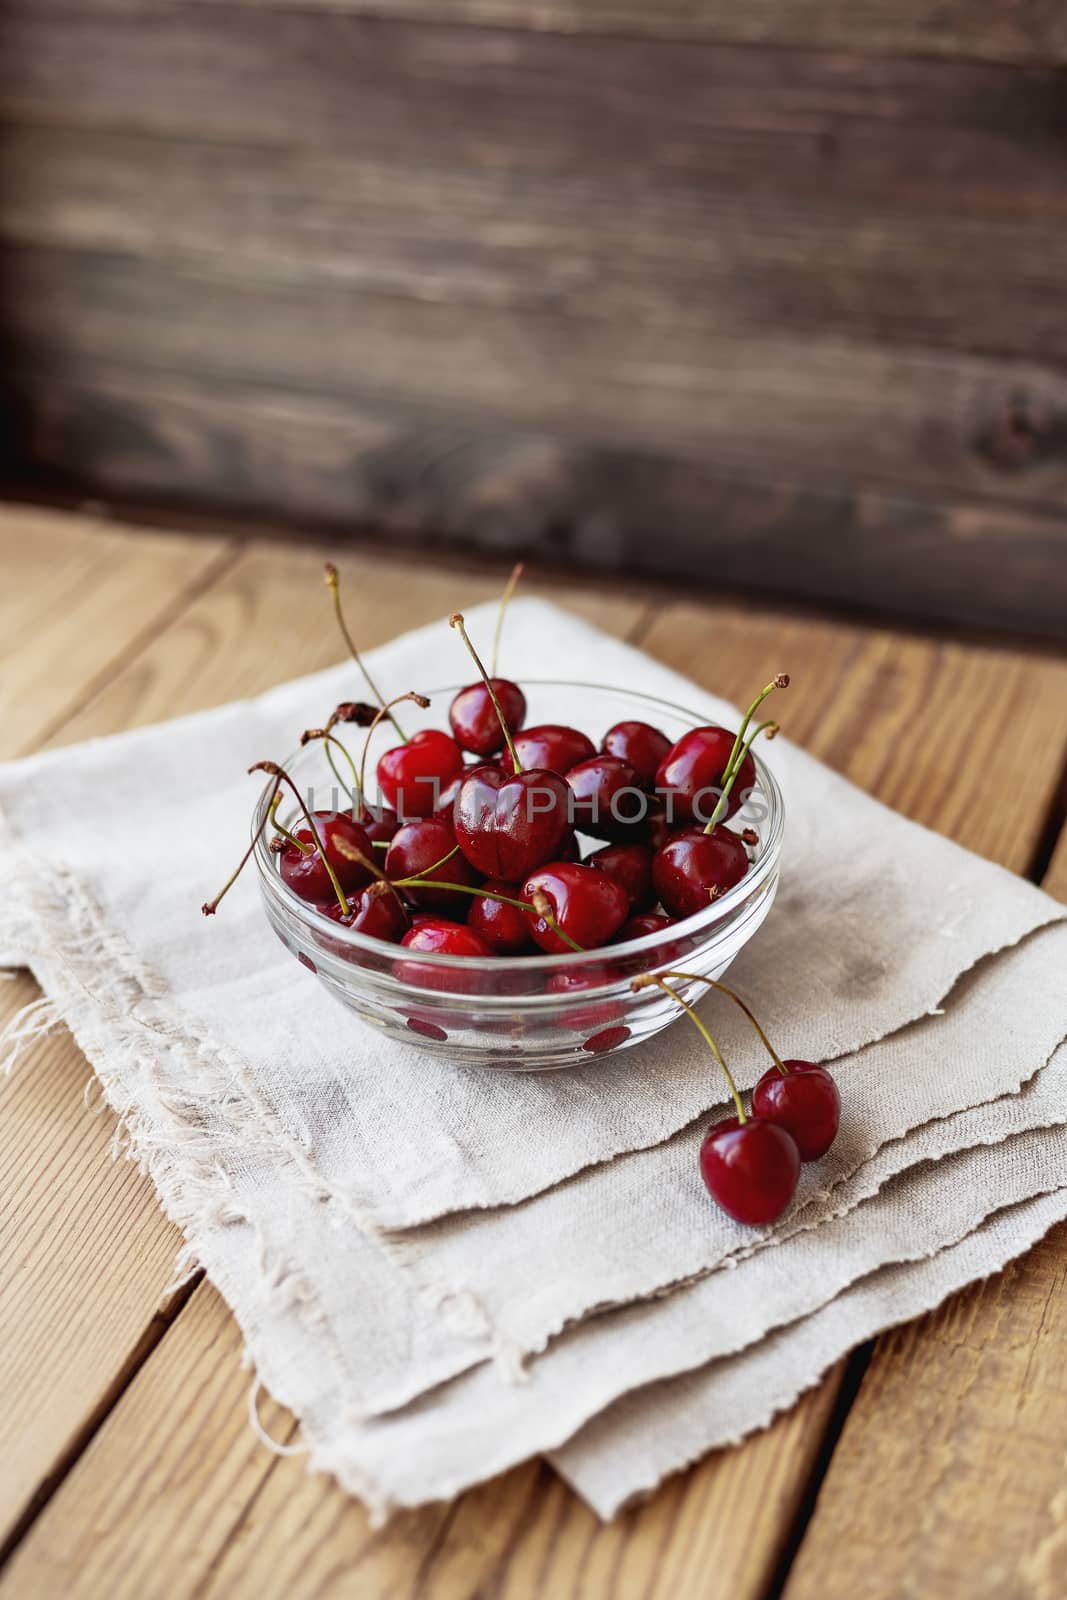 Fresh juicy sweet cherries in glass bowl. Rustic background with homespun napkin.